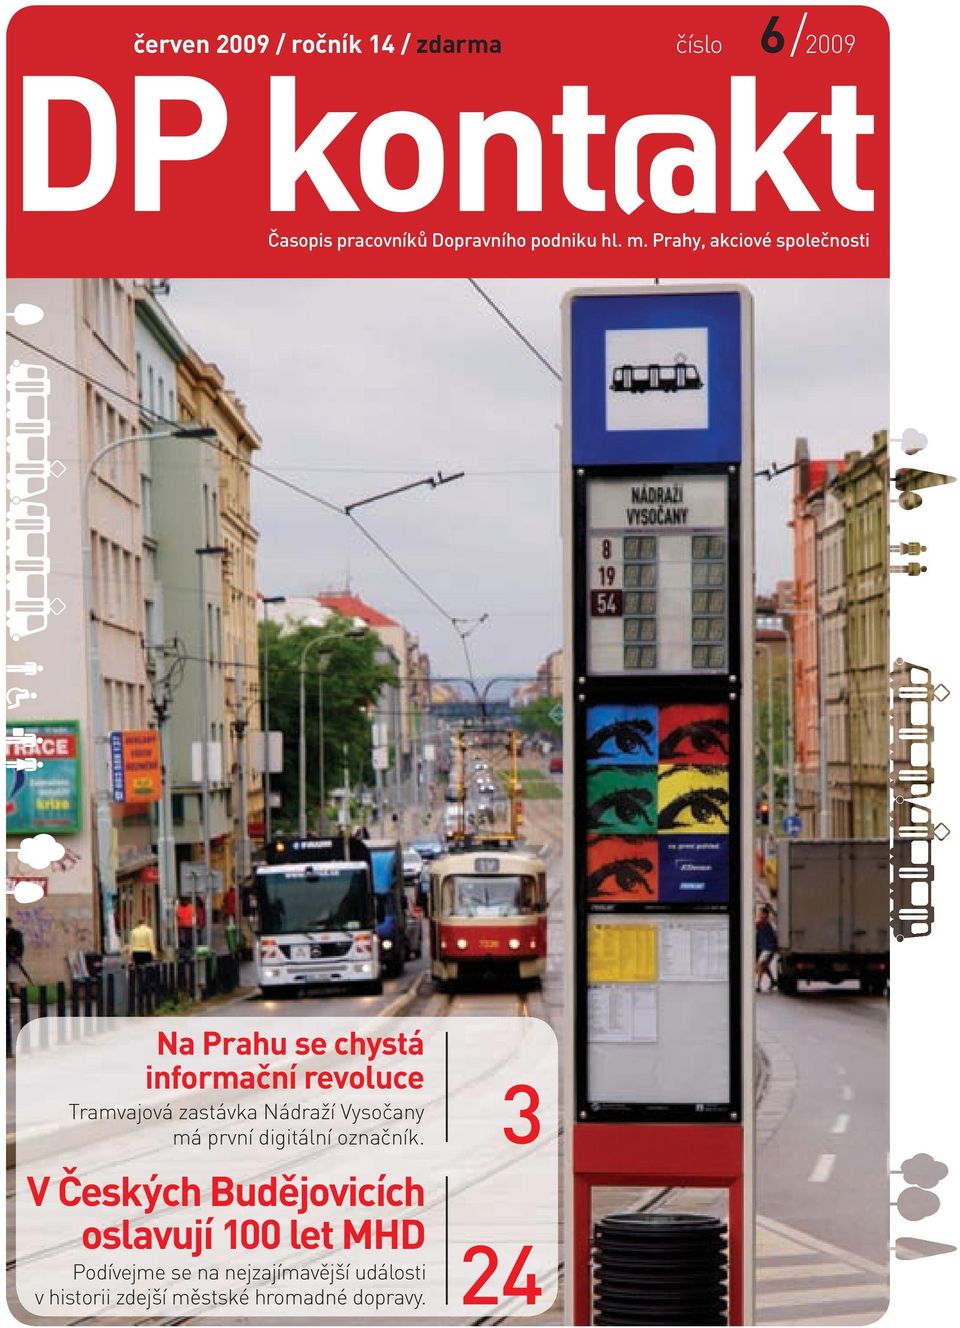 Prahy, akciové společnosti Na Prahu se chystá informační revoluce Tramvajová zastávka